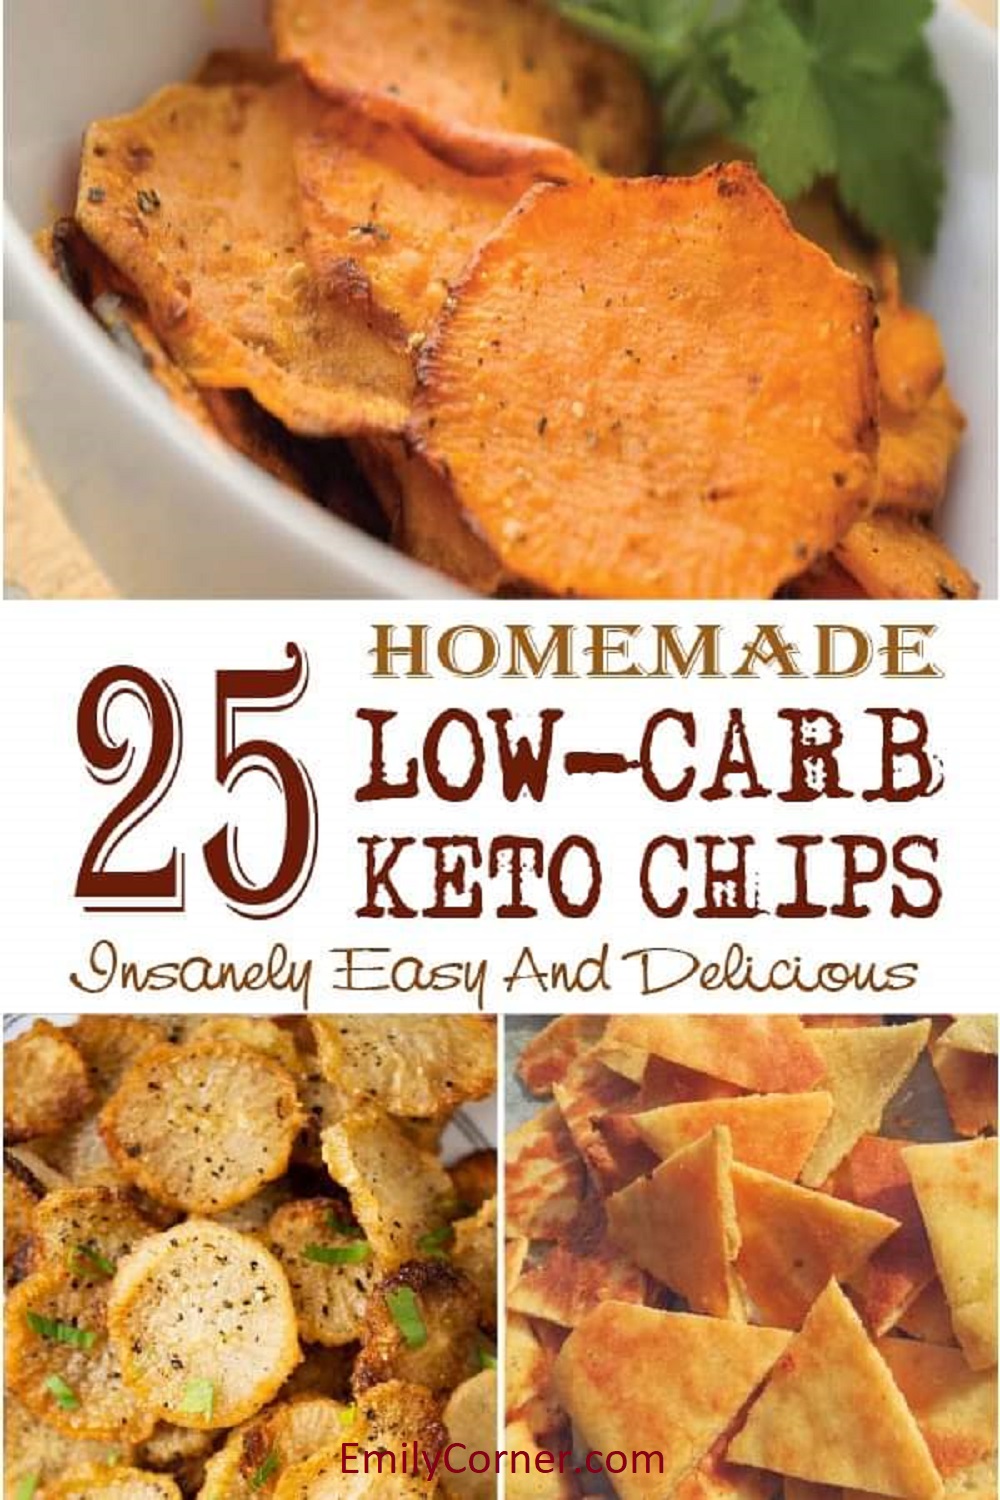 Homemade keto chips recipes